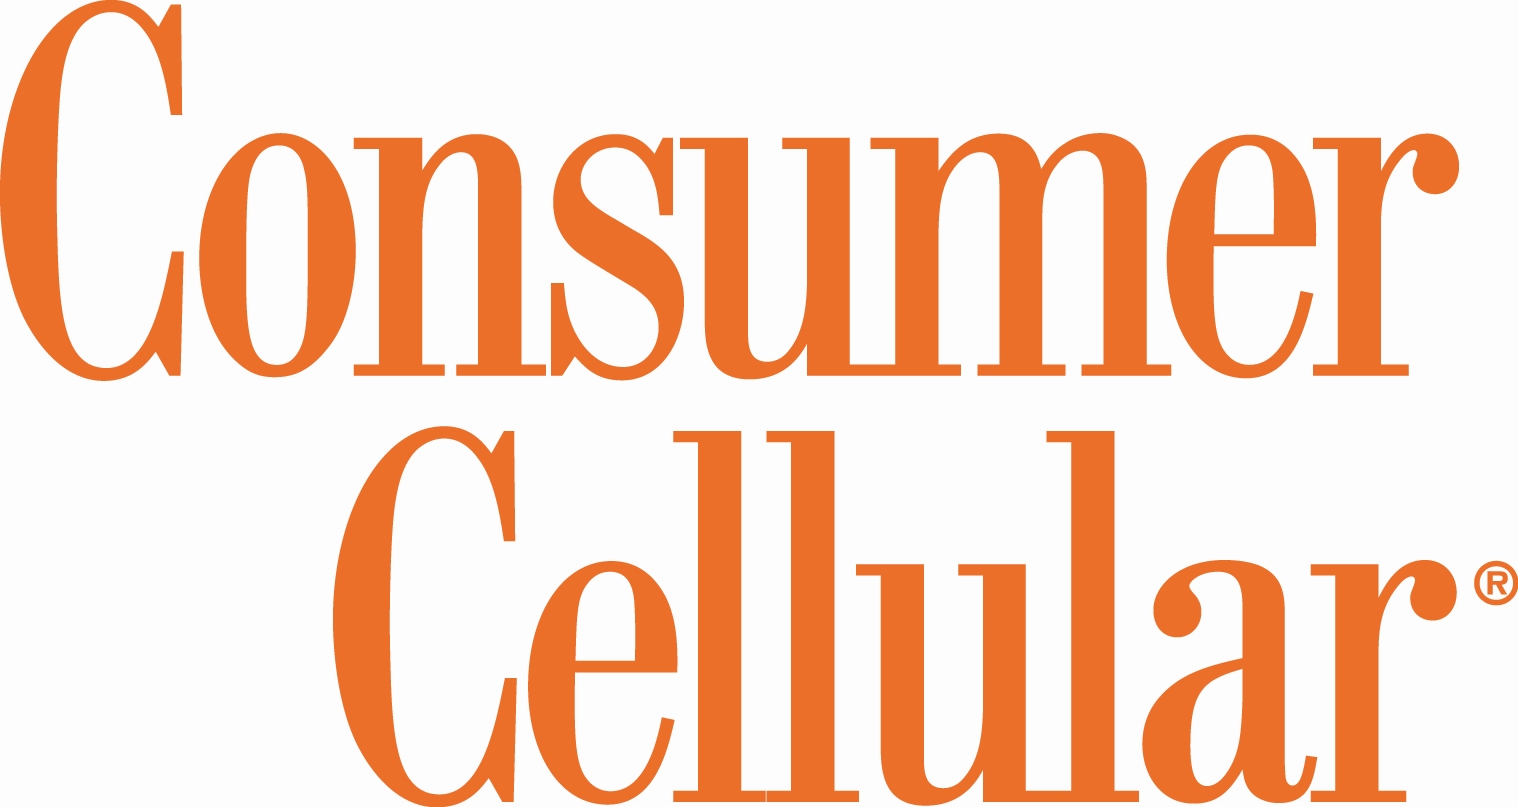 Consumer Cellular Profile